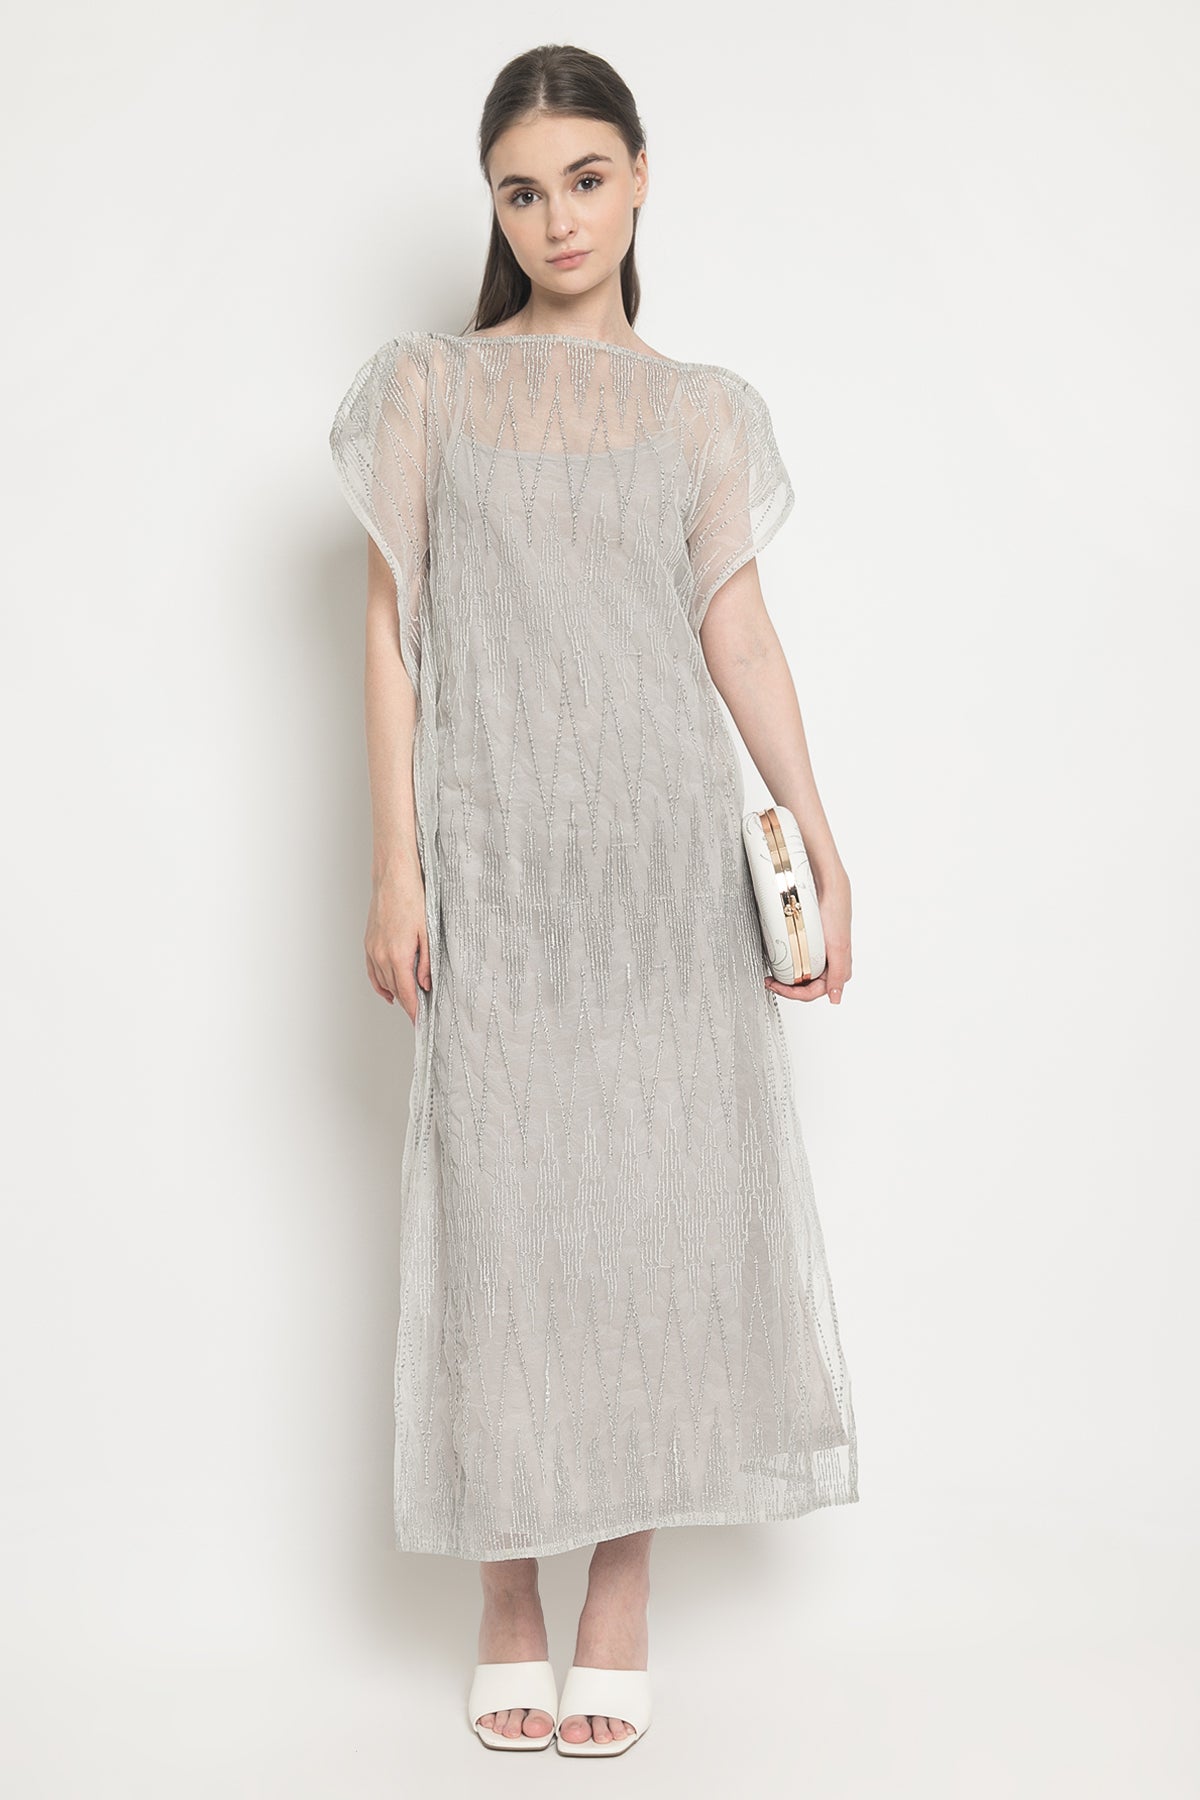 Alaia Dress in Light Grey